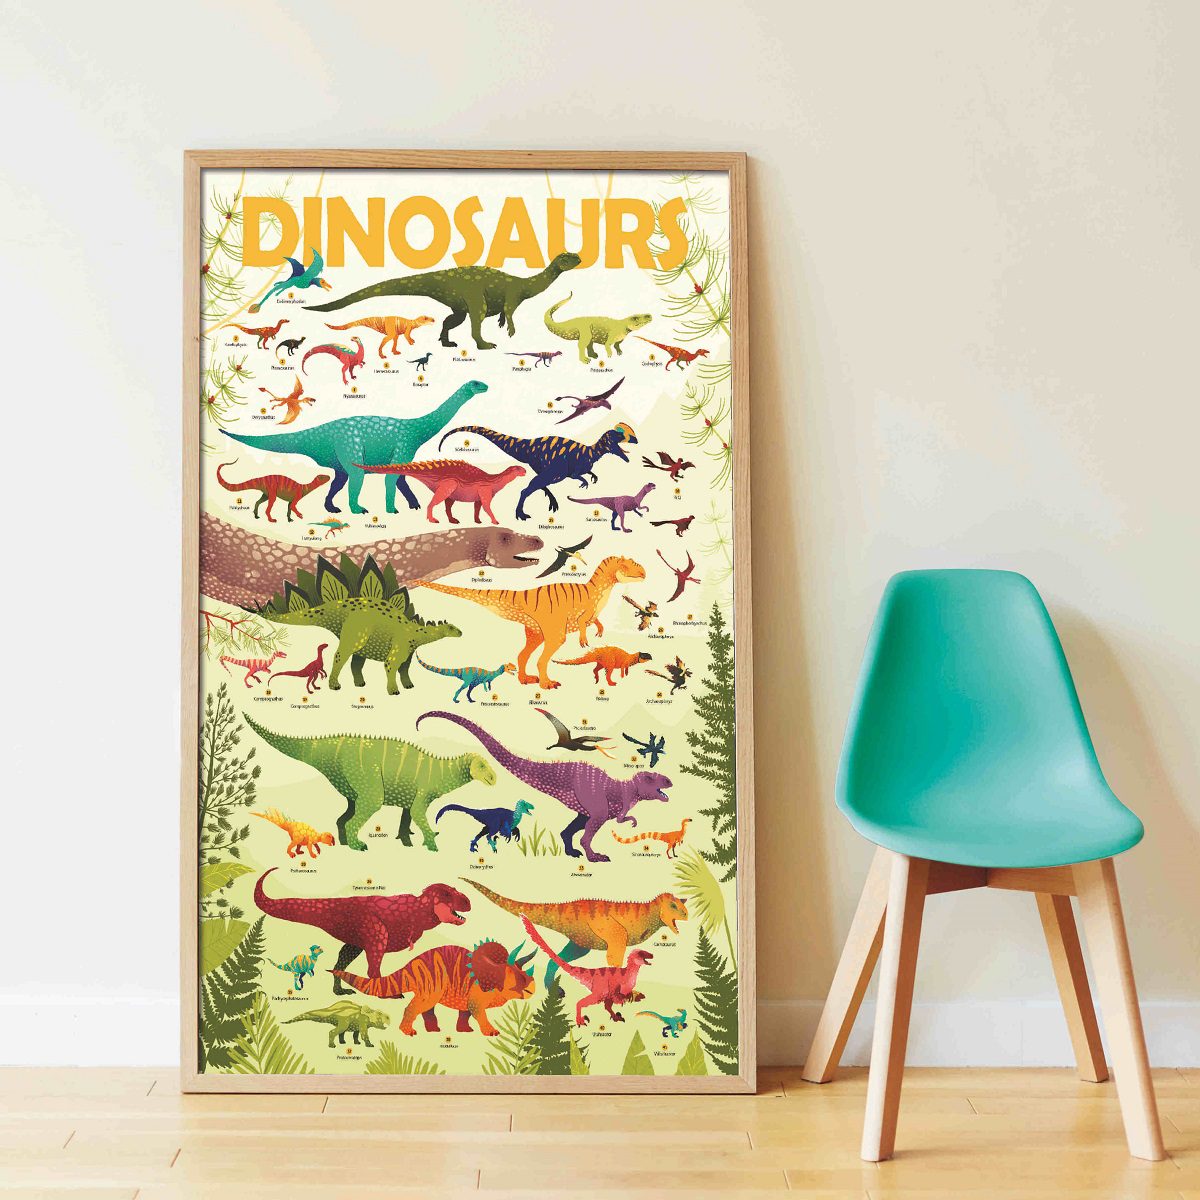 Poppik Discovery Poster Dinosaurs